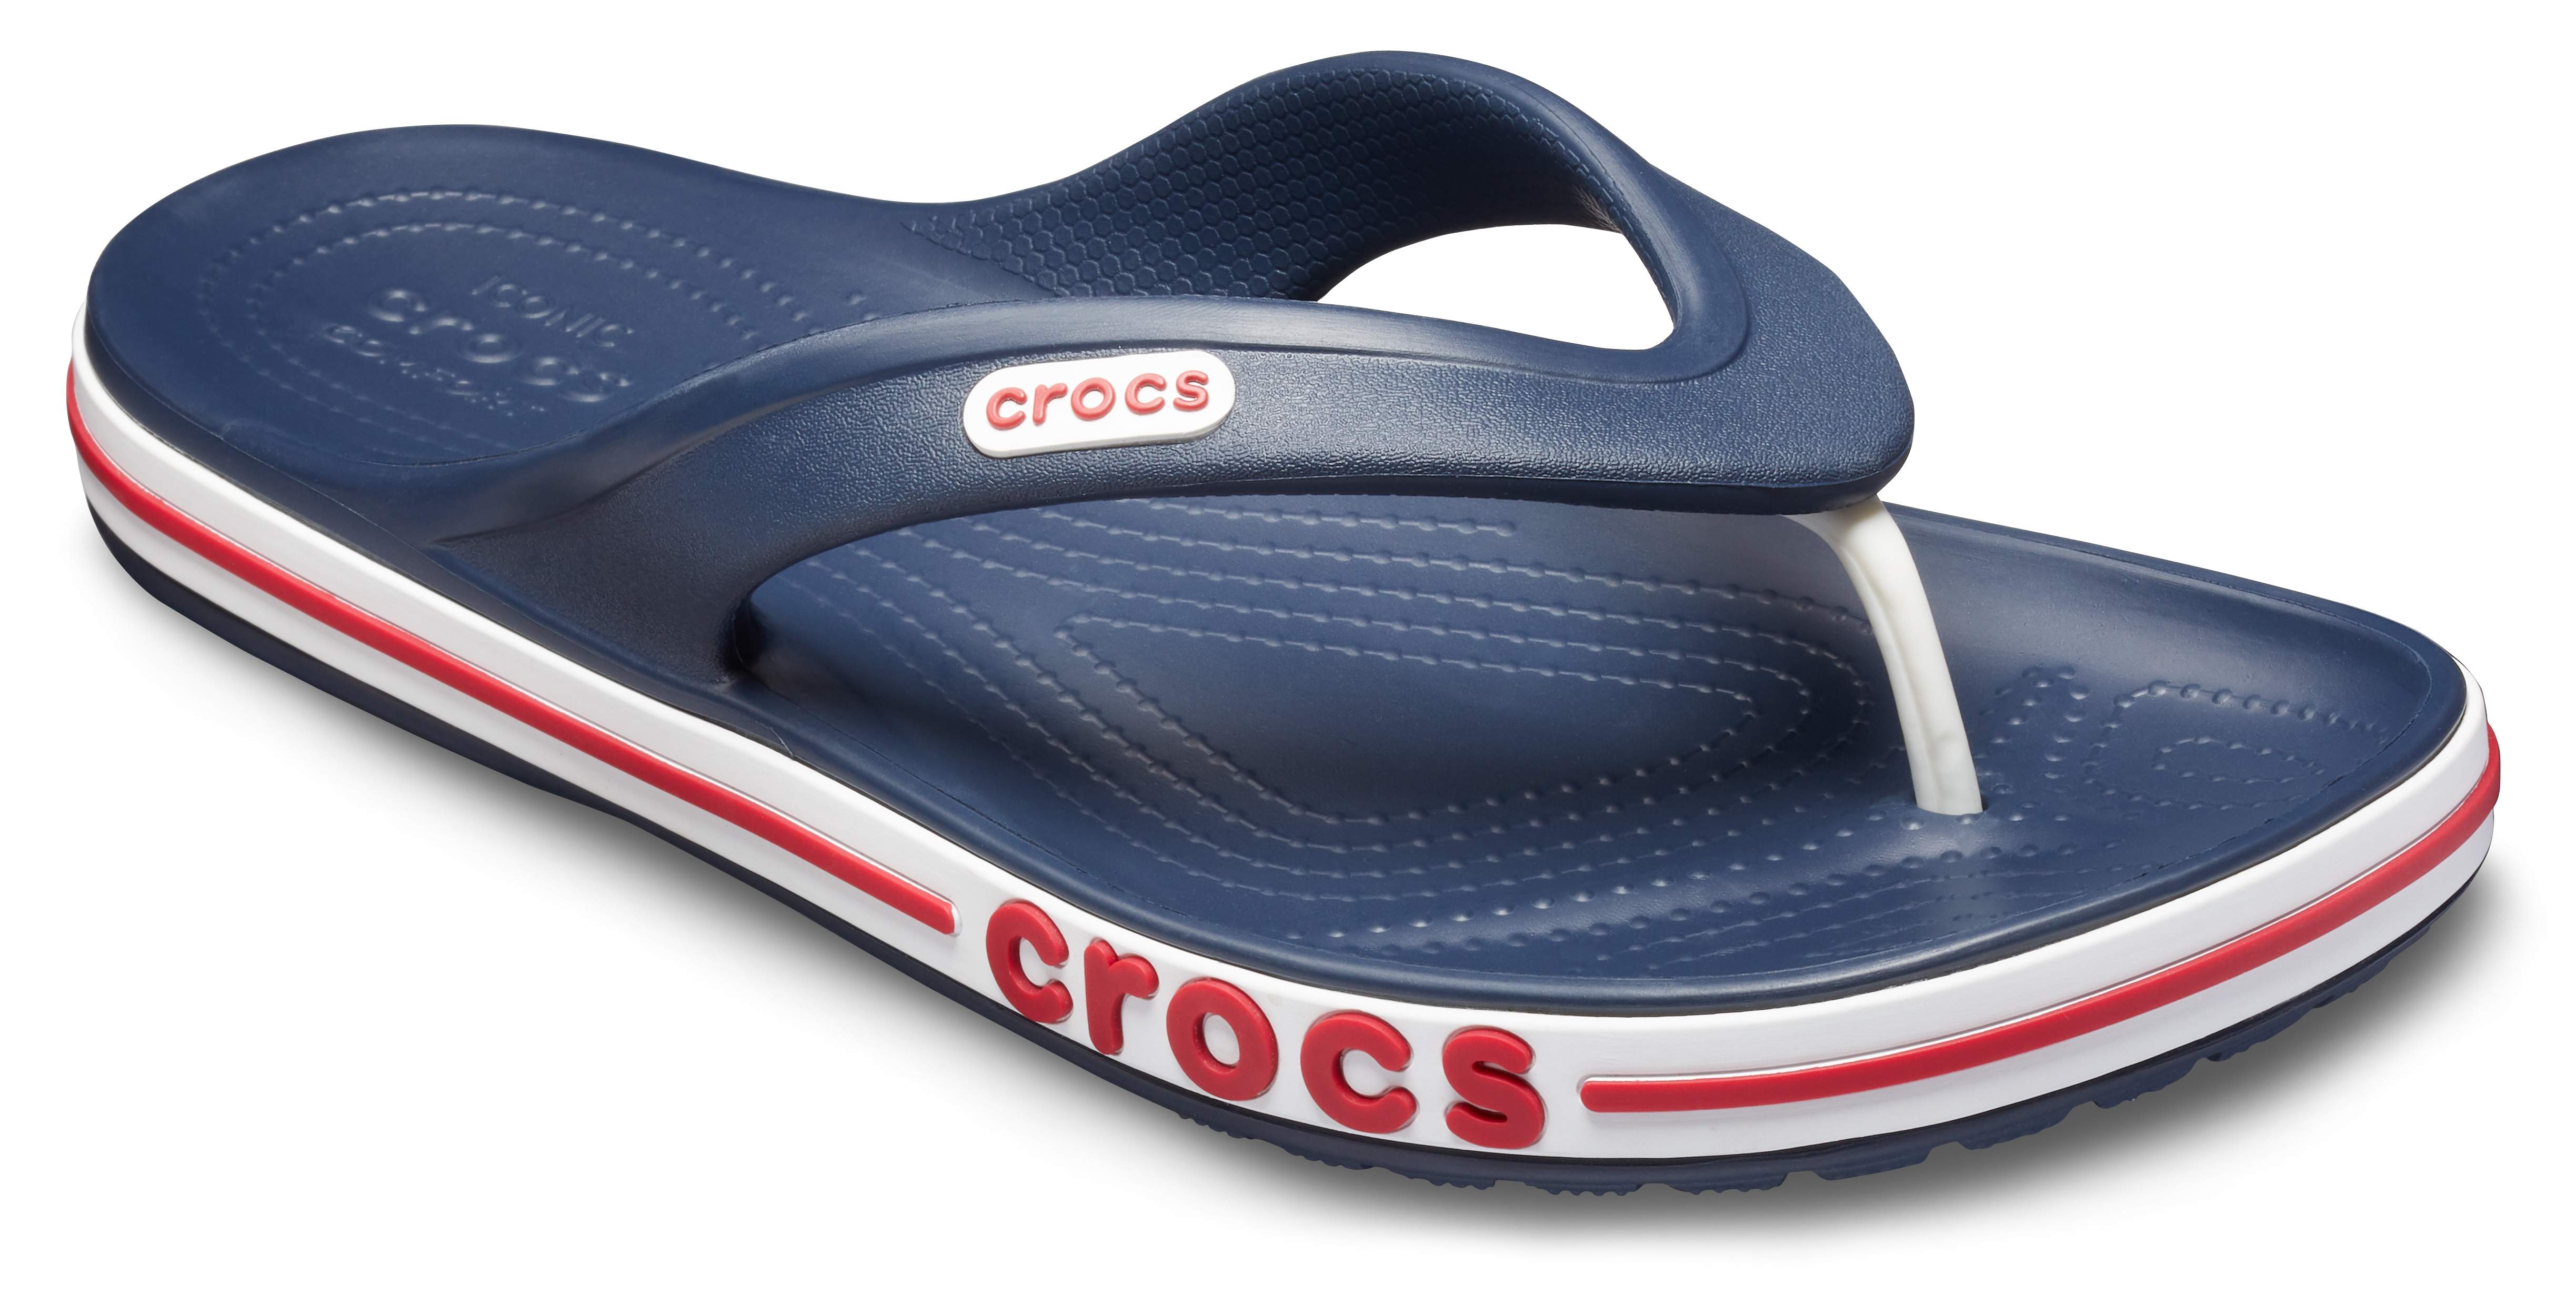 womens camo crocs flip flops